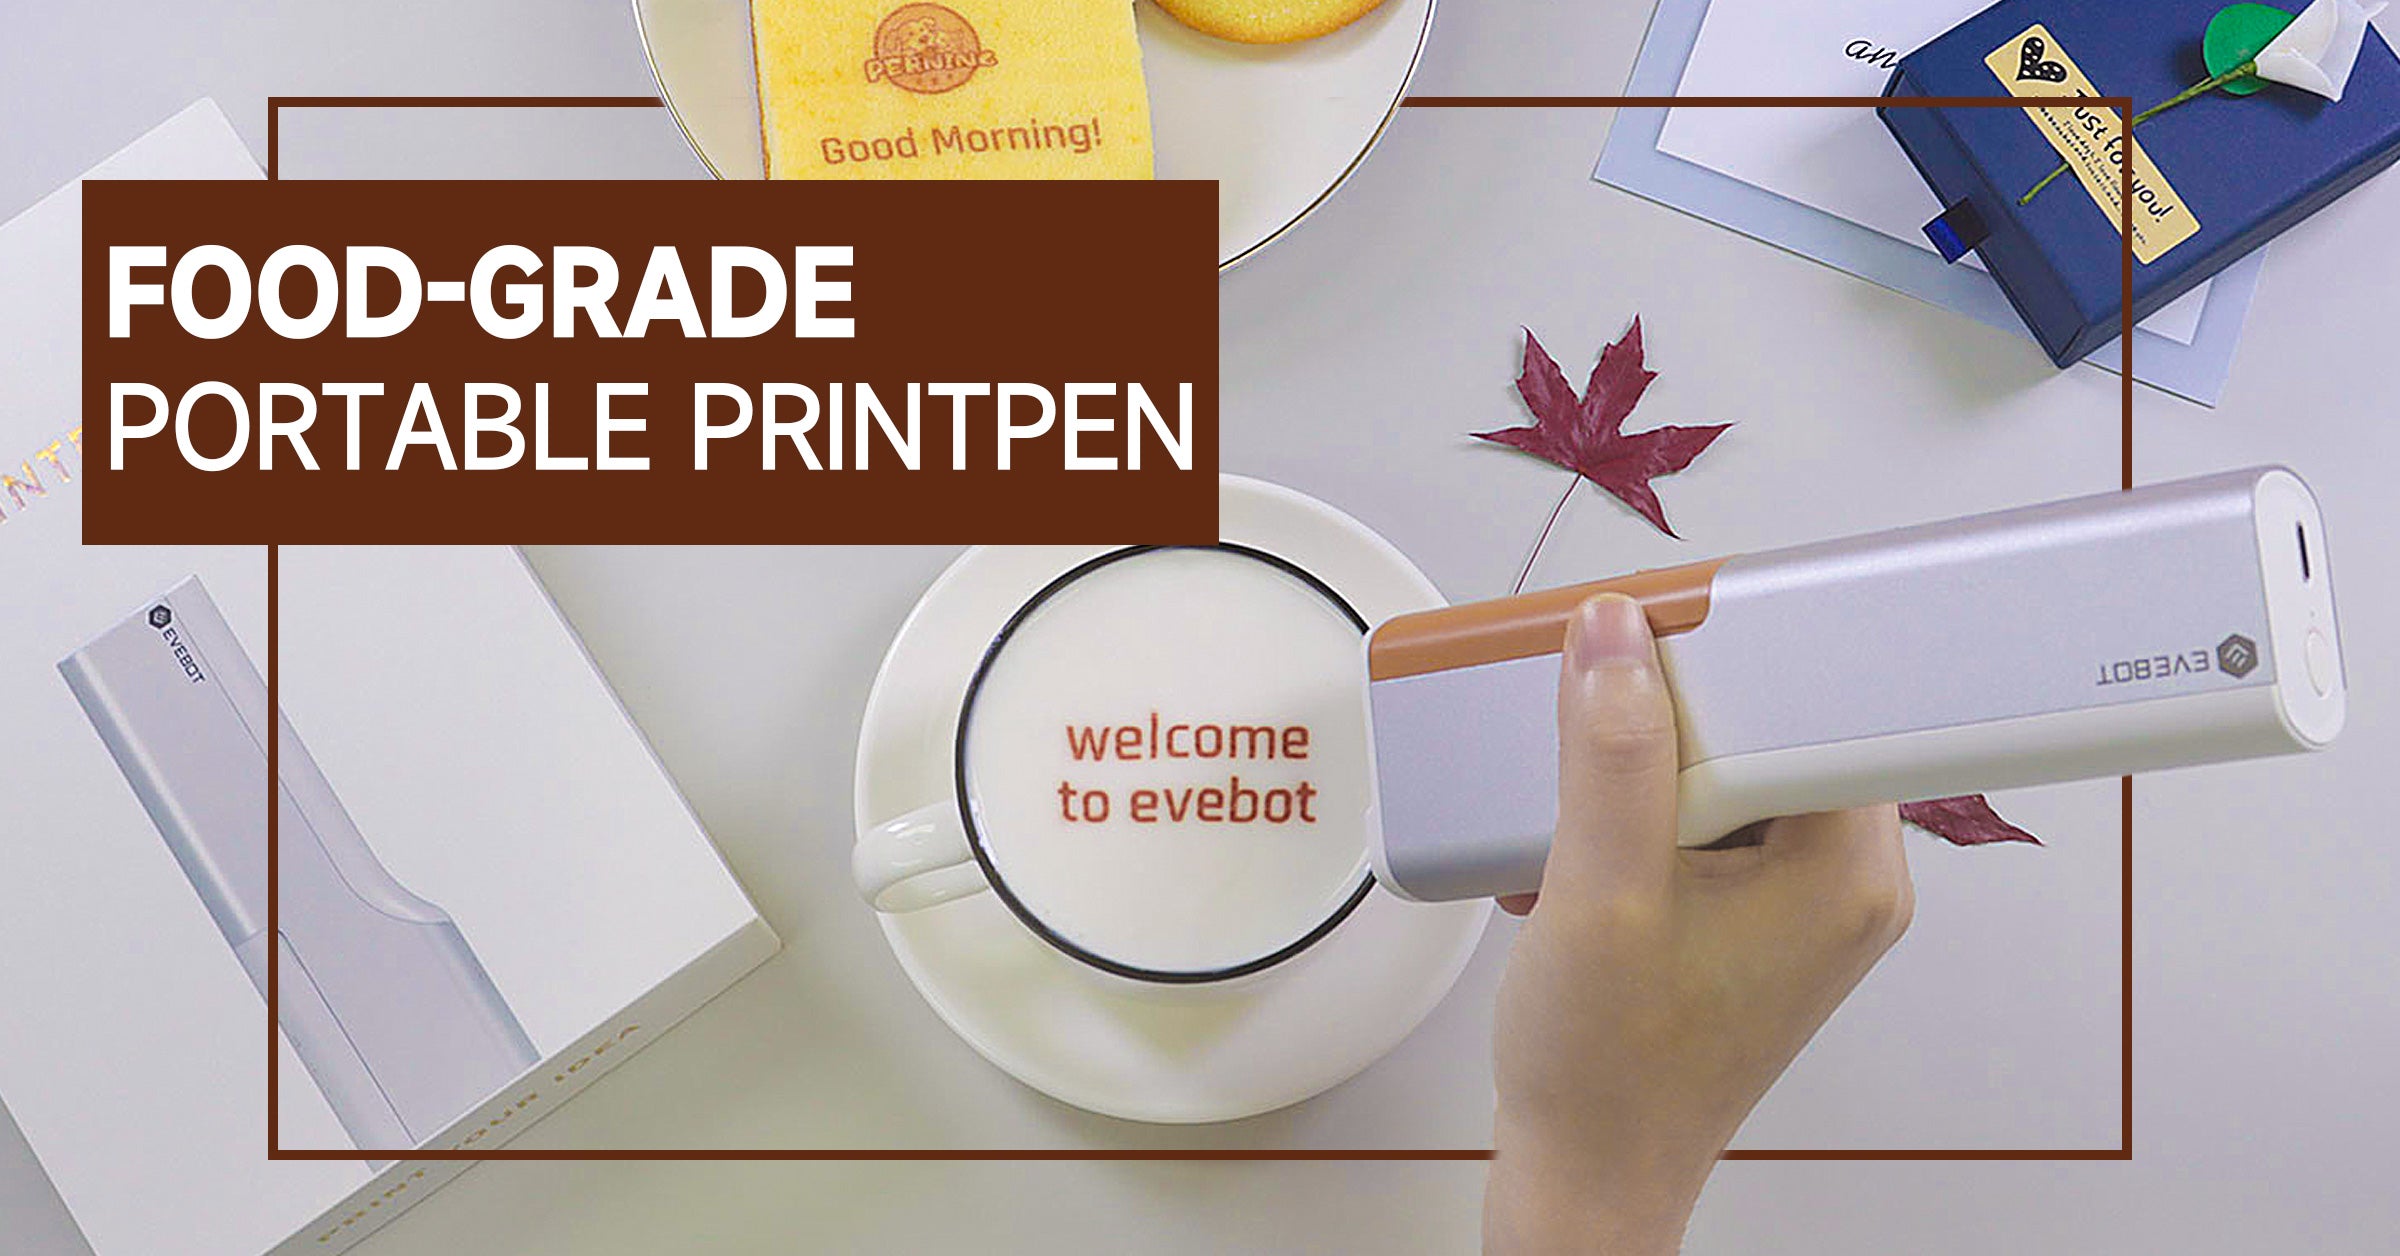 Food-grade Portable PrintPen Creates Infinite Possibilities – Evebot